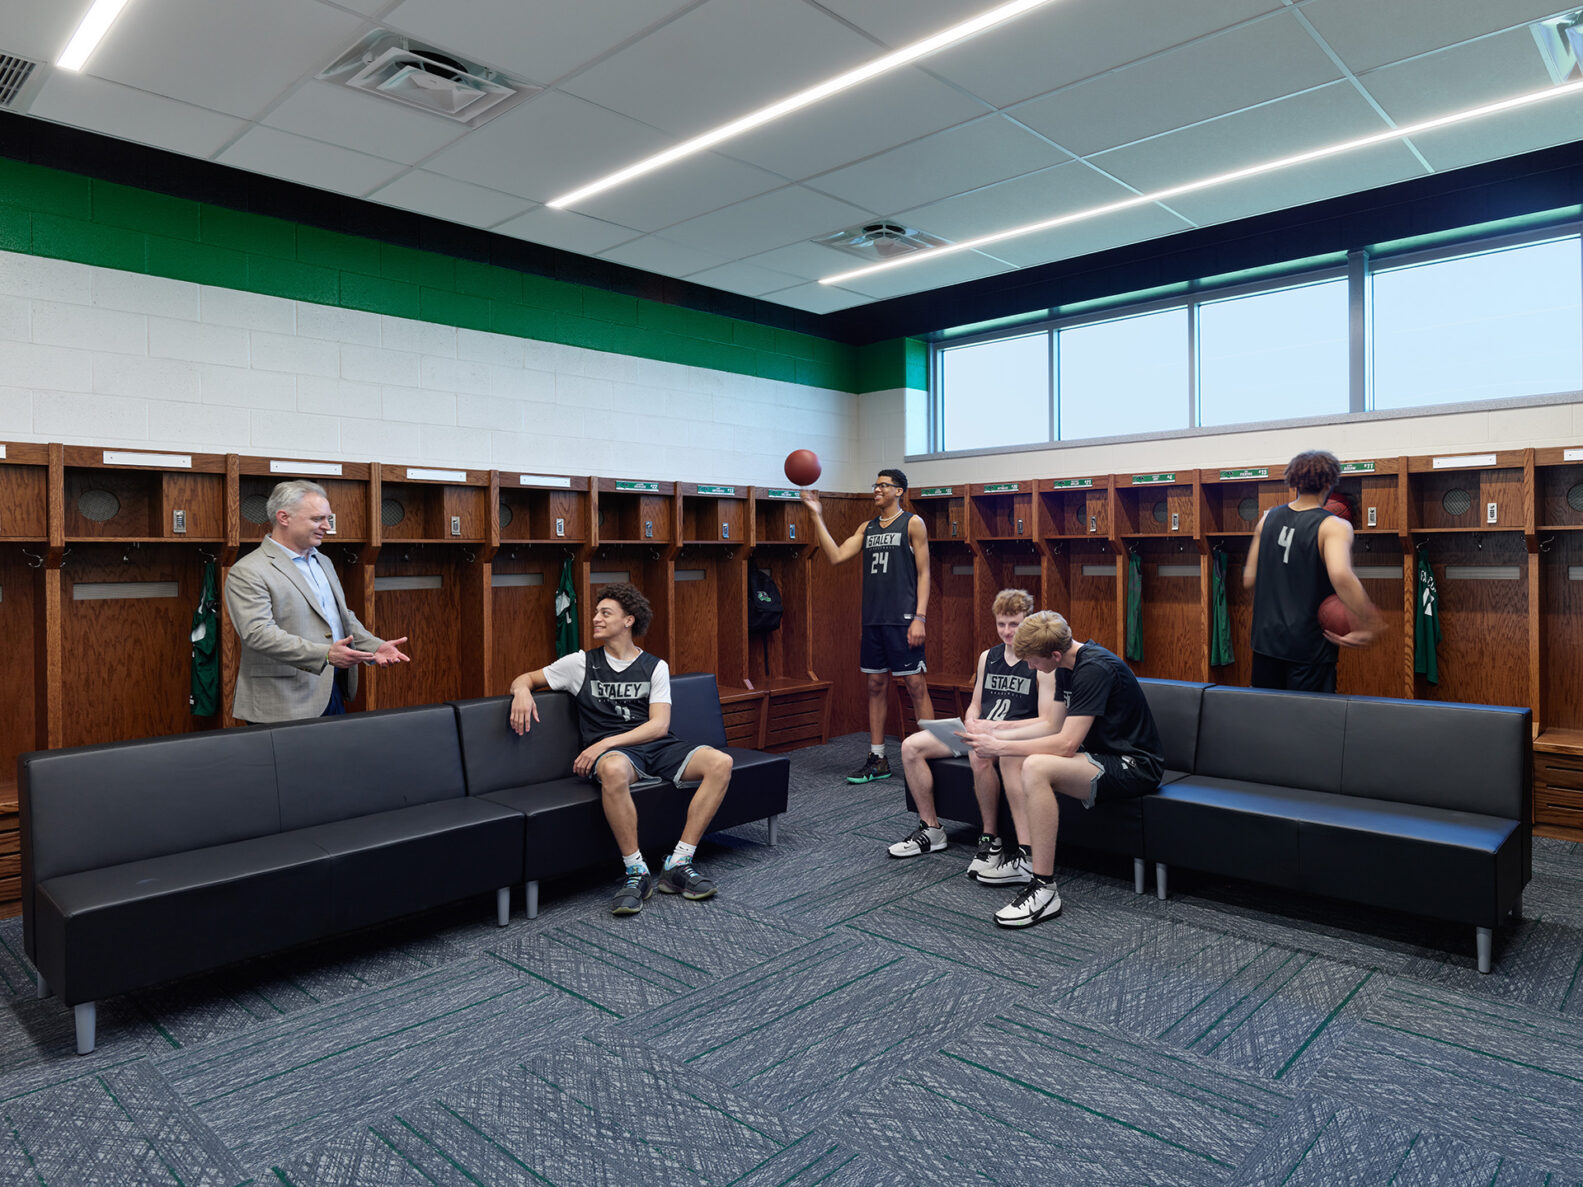 High school basketball team talking in their locker room.